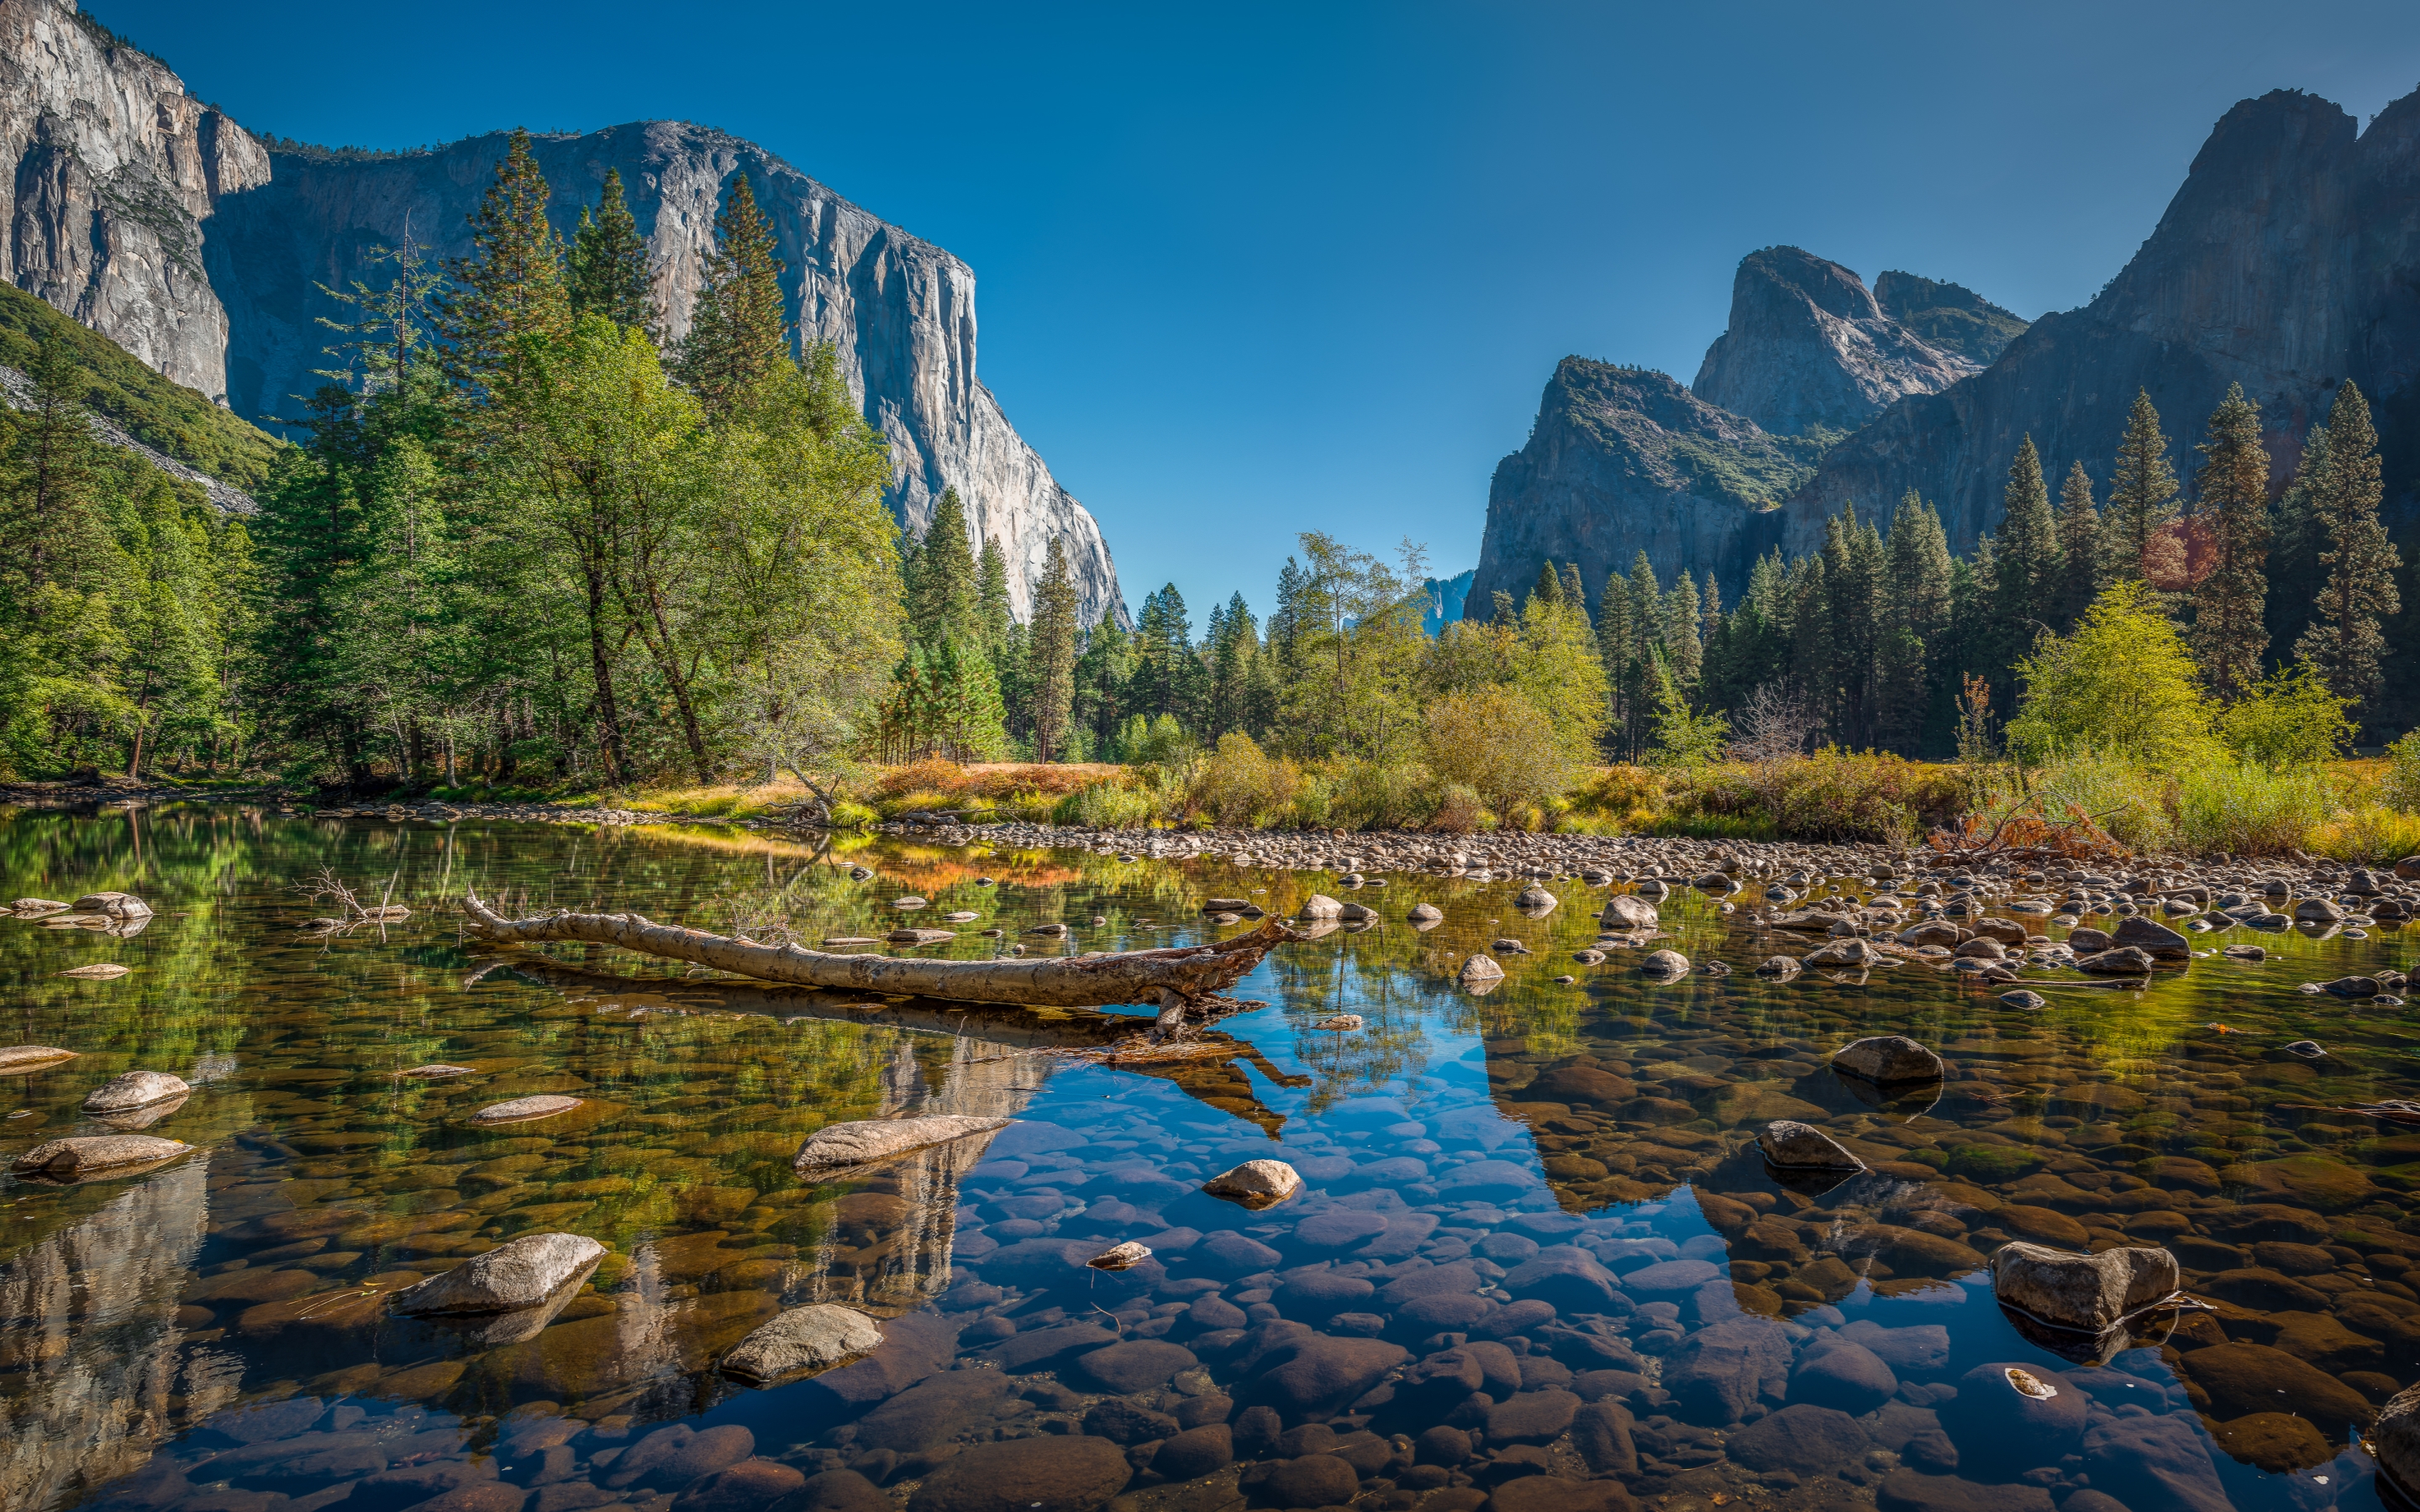 Title views. Йосемити национальный парк. Национальный парк Йосемити Калифорния США. Национальный Йосемитский парк в Северной Америки. Йосемити национальный парк прозрачное озеро.